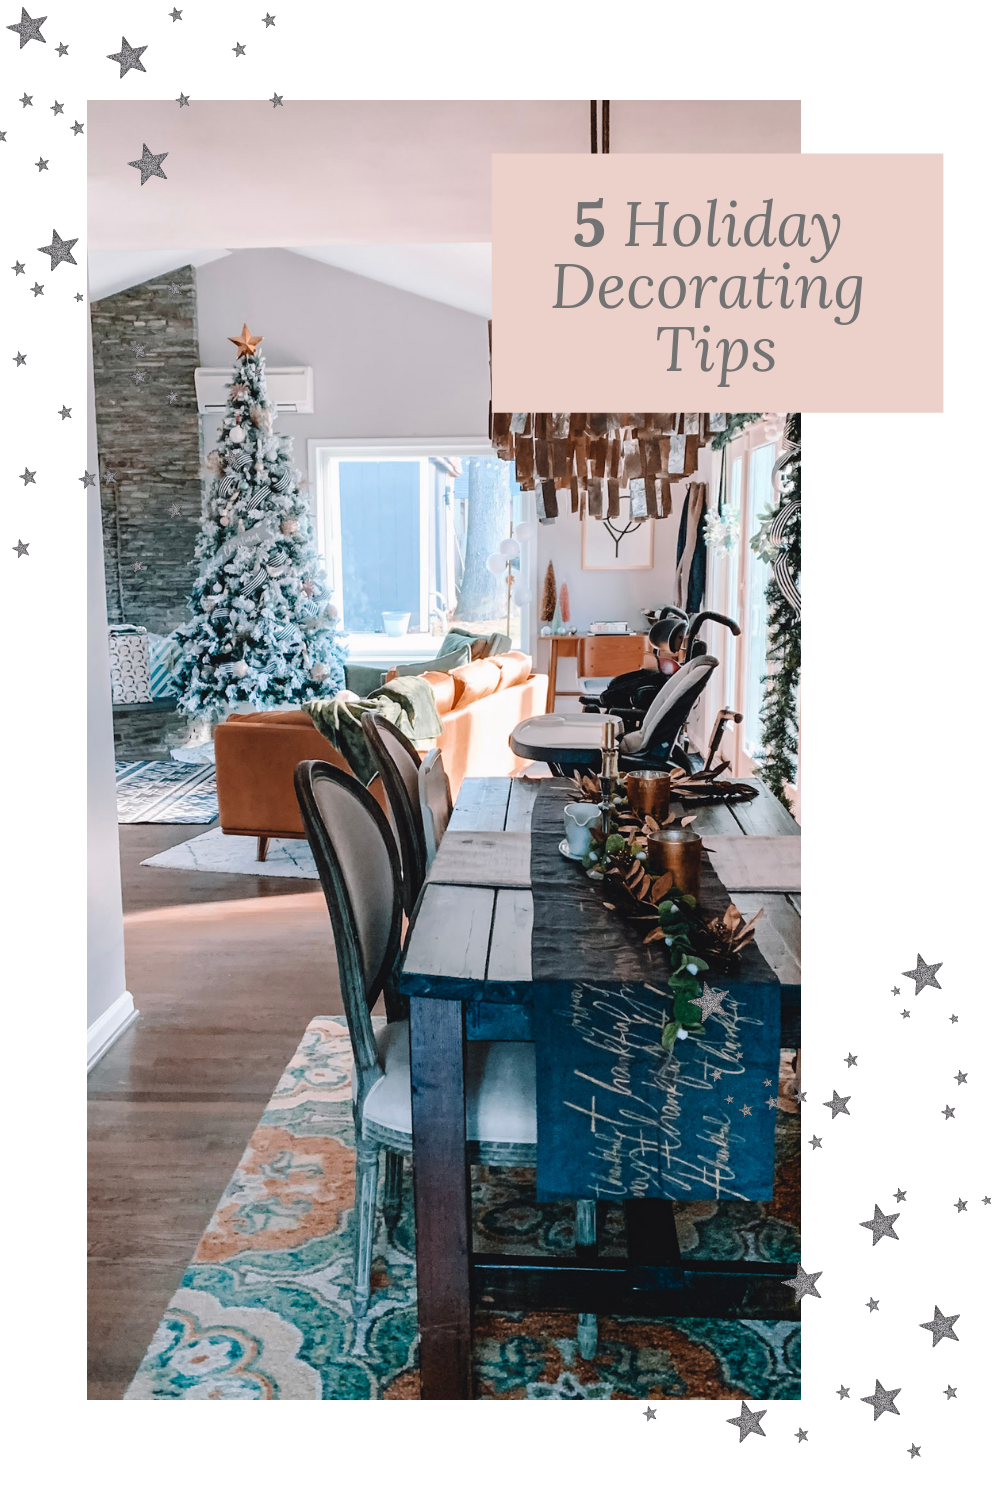 5 Holiday Decorating Tips.png